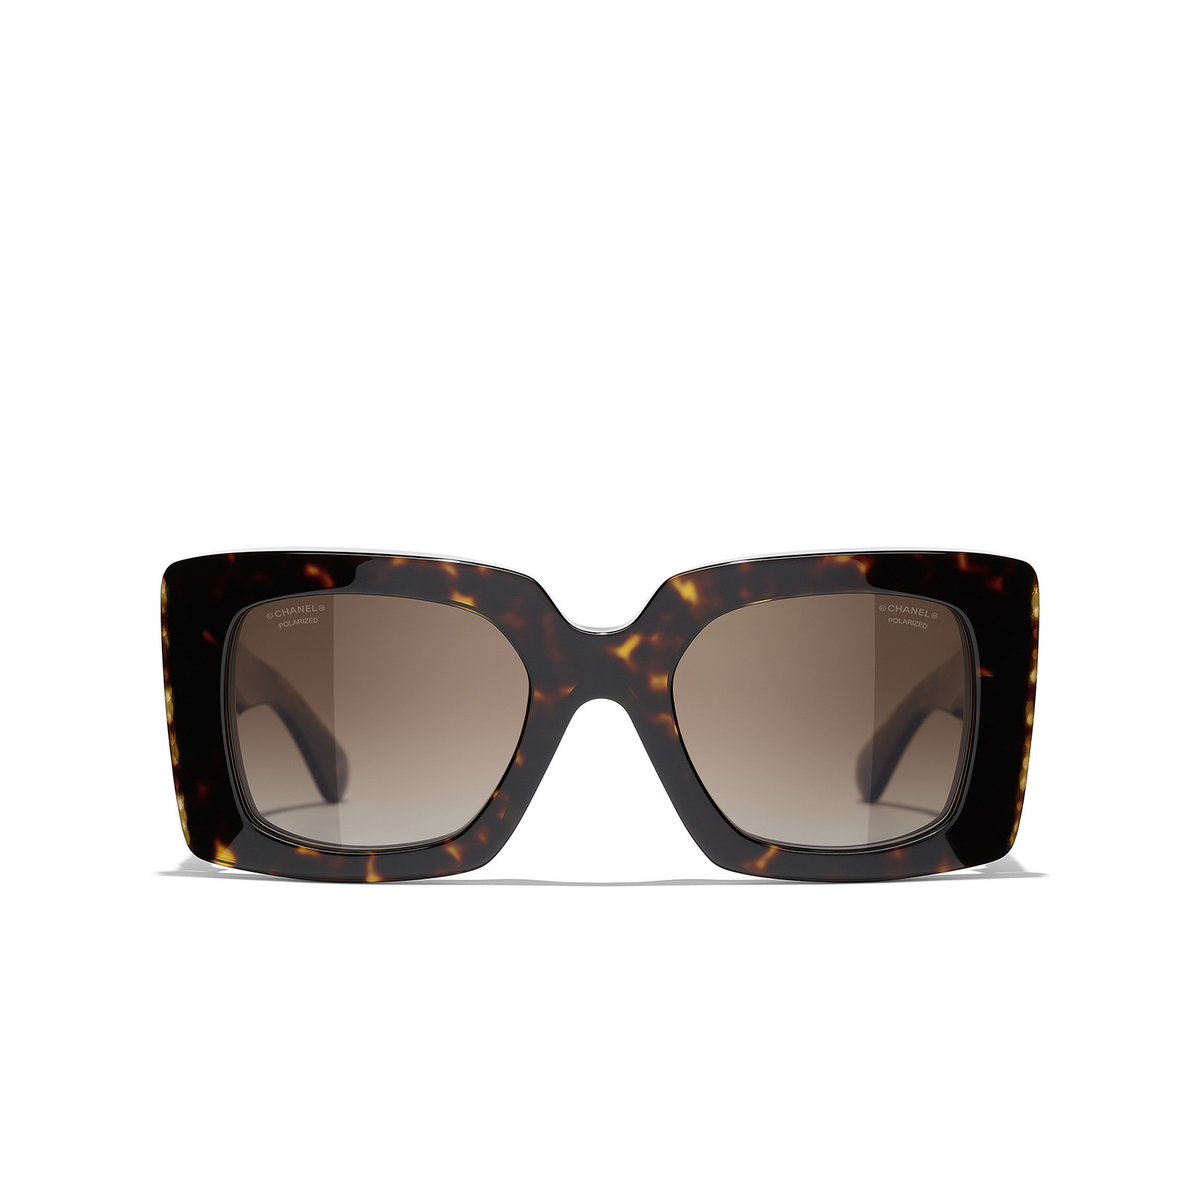 CHANEL square Sunglasses C714S9 Dark Tortoise - front view